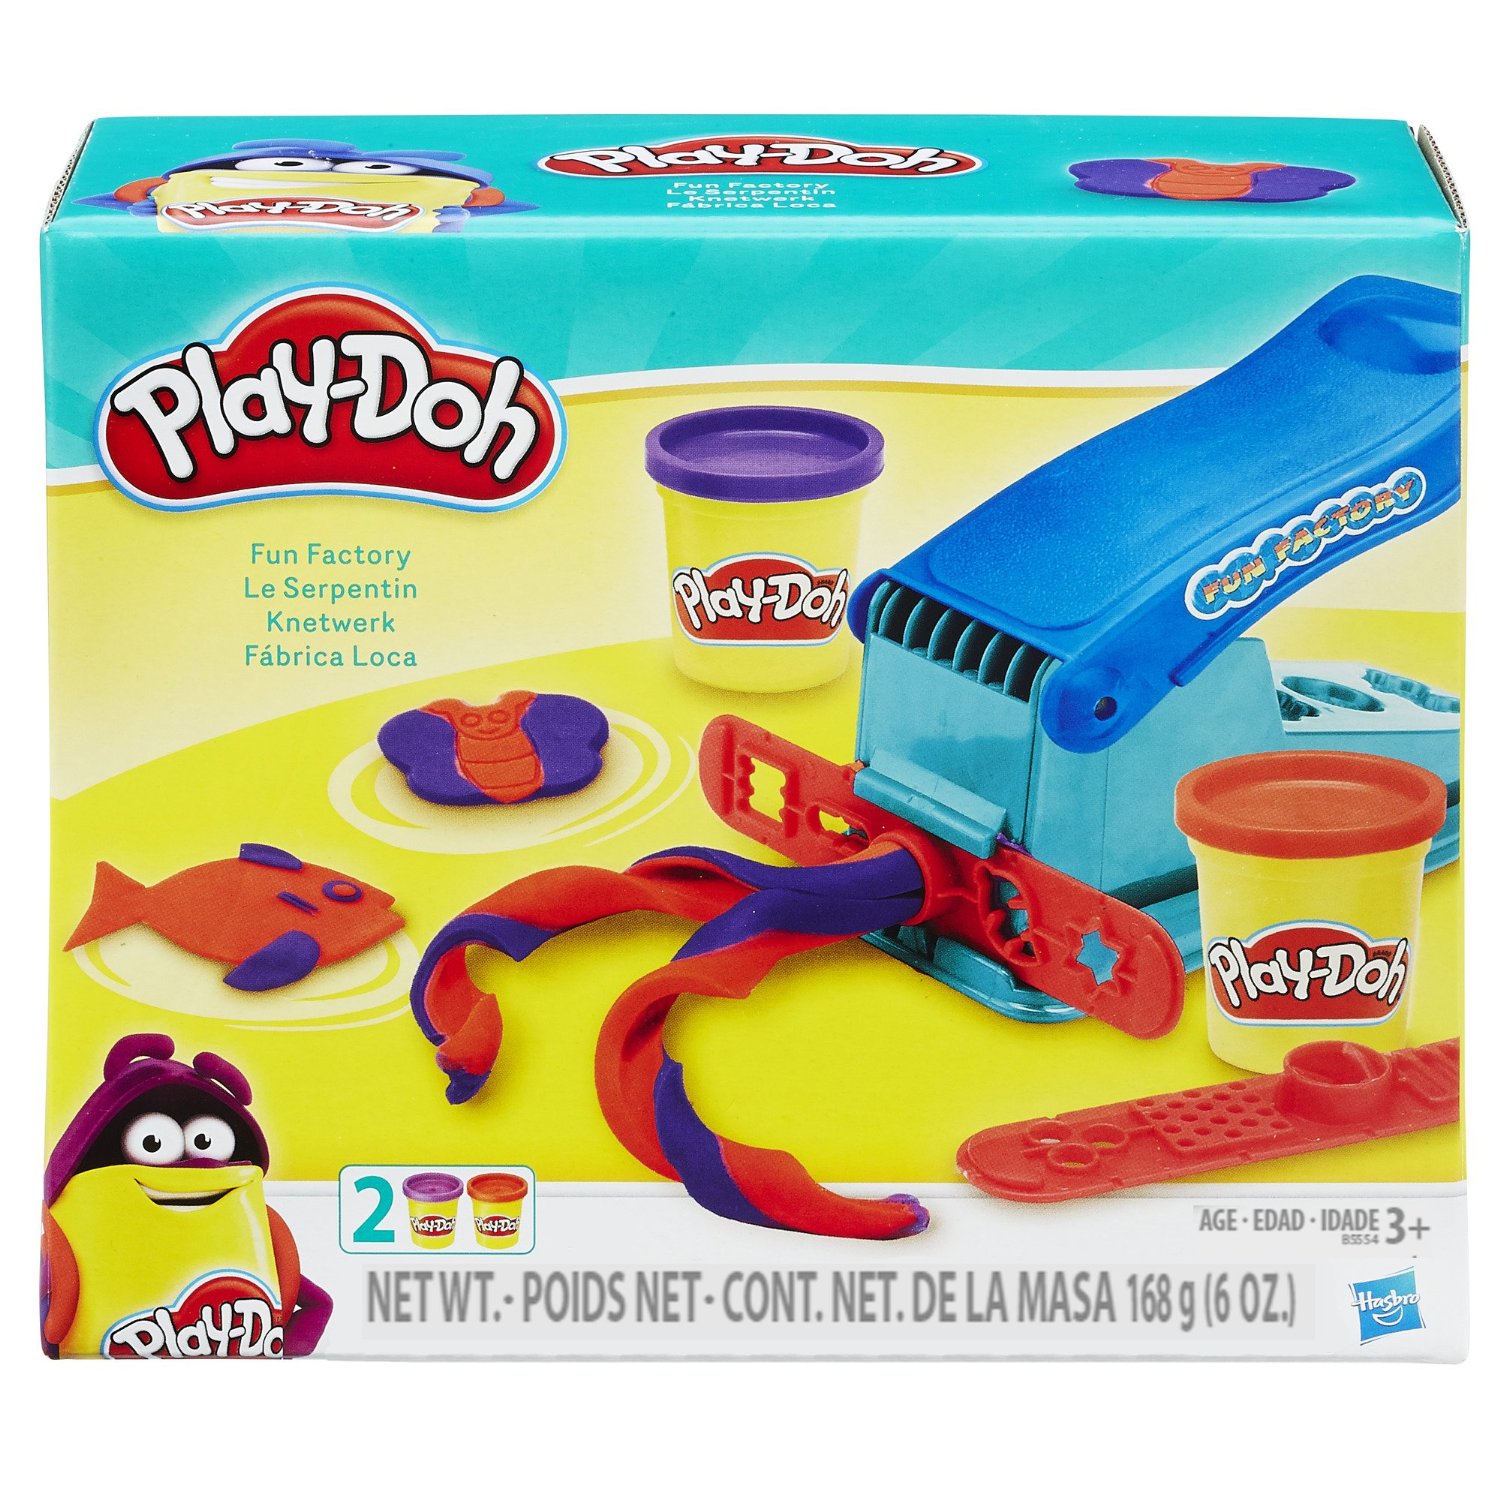 Play-Doh Fun Factory Set – Just $4.99!